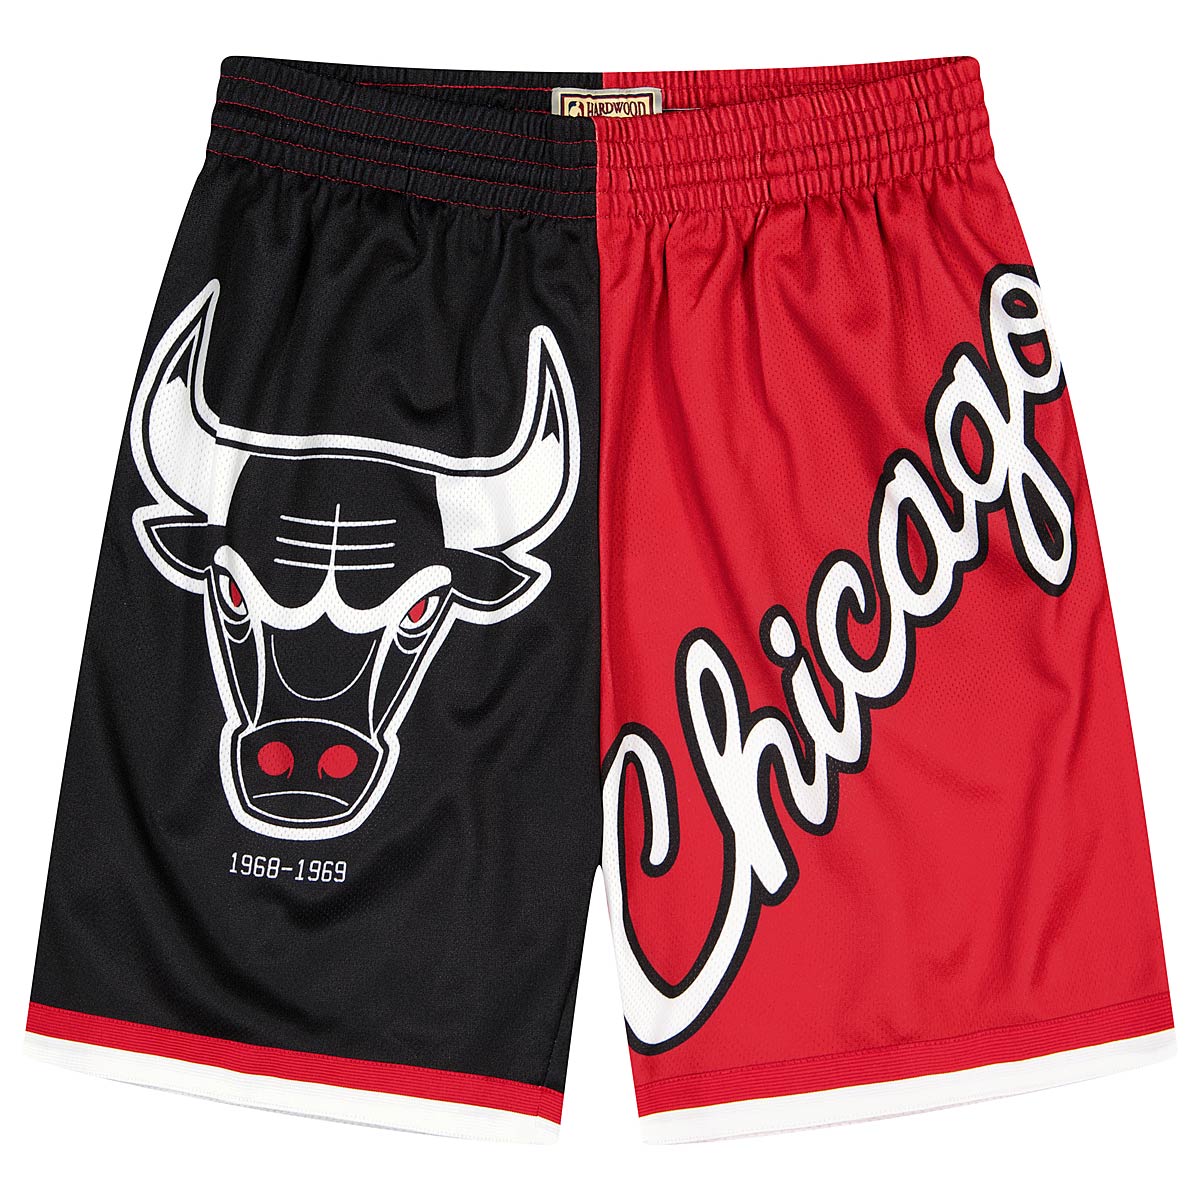 MITCHELL & NESS Chicago Bulls Shorts BLACK 540B 300 7CBUQPV - Karmaloop